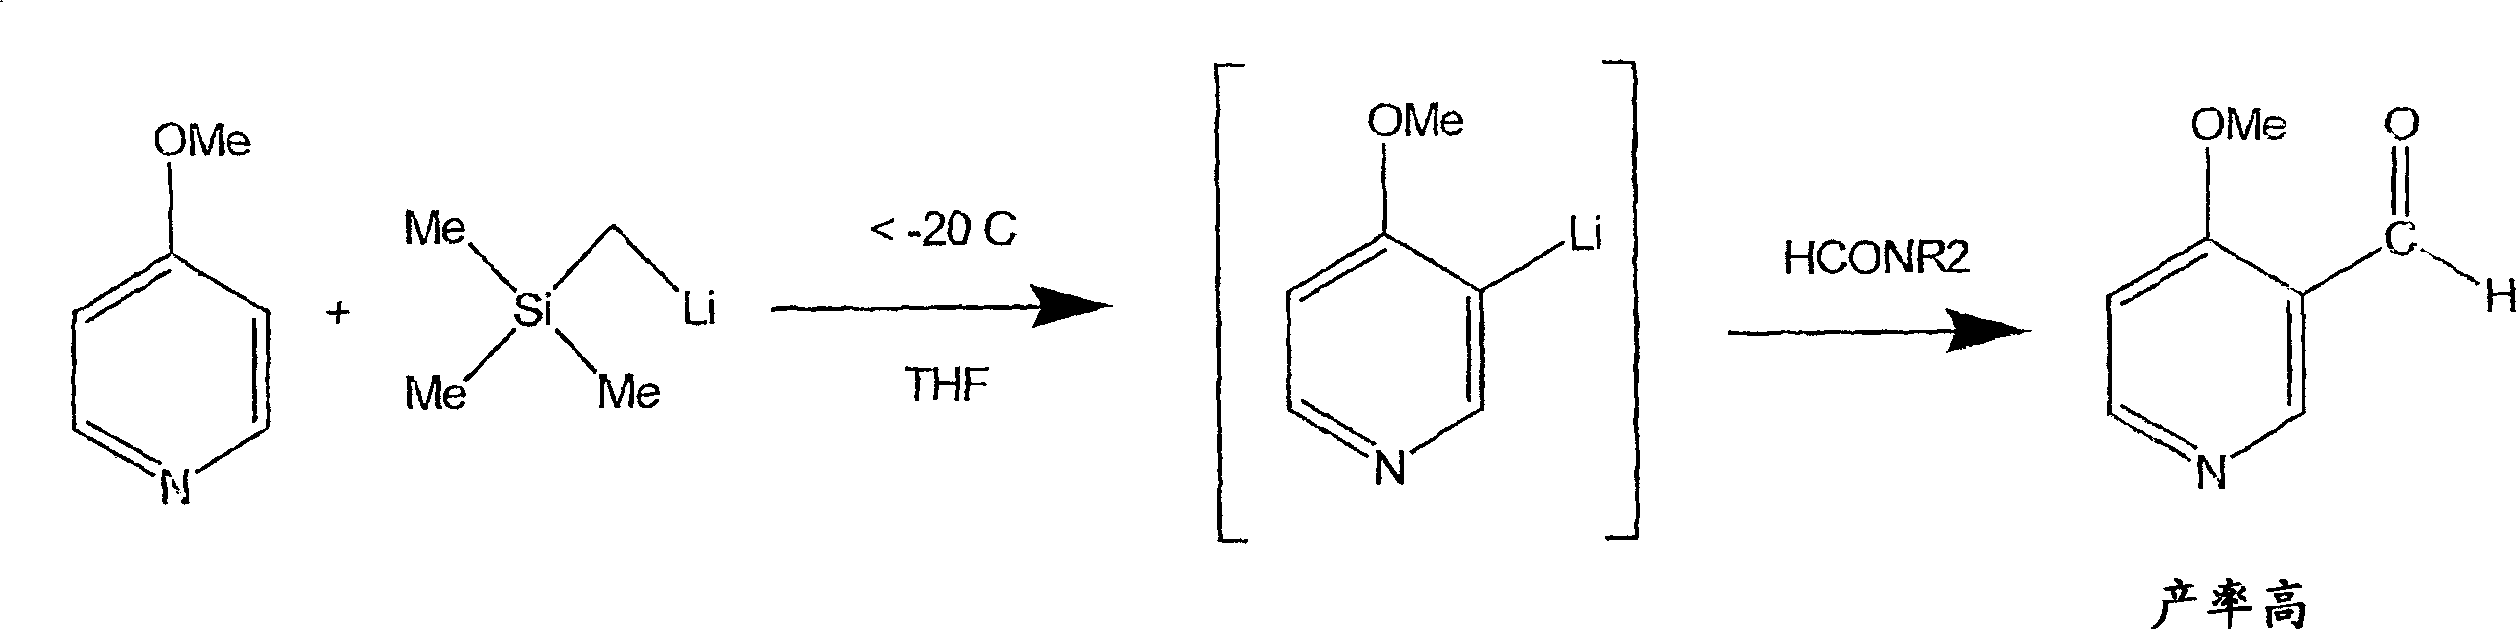 Using alkylmetal reagents for directed metalation of azaaromatics